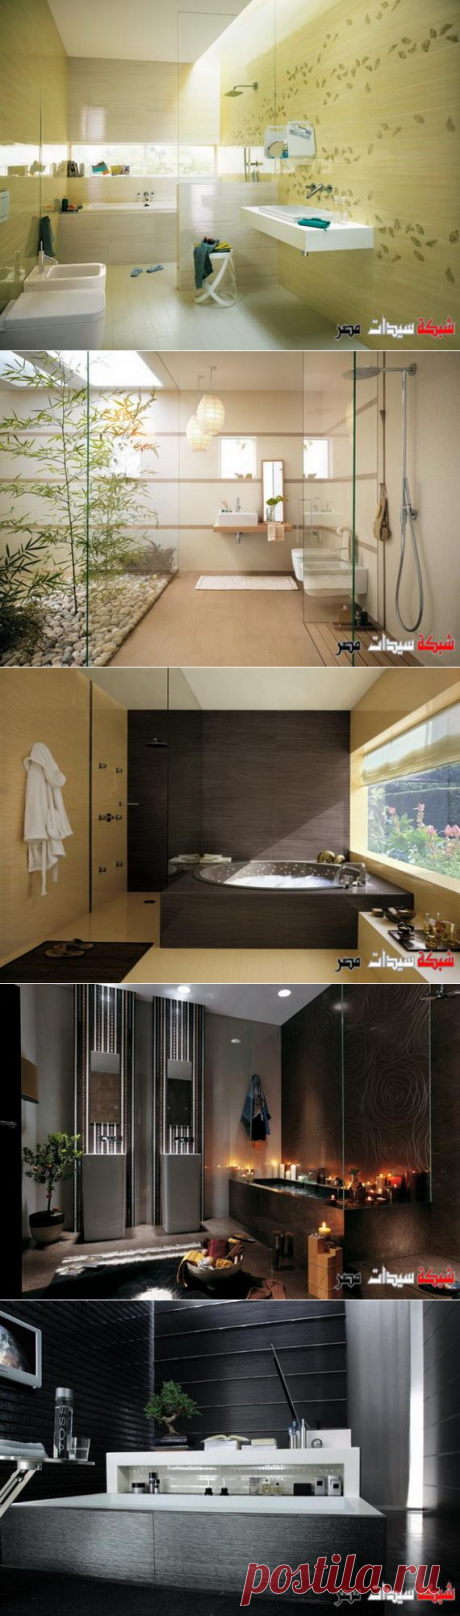 ديكور 2021 - جديد حمامات 2021 - حمامات ديزاينات جديدة 2021 - Luxury bathroom 2021